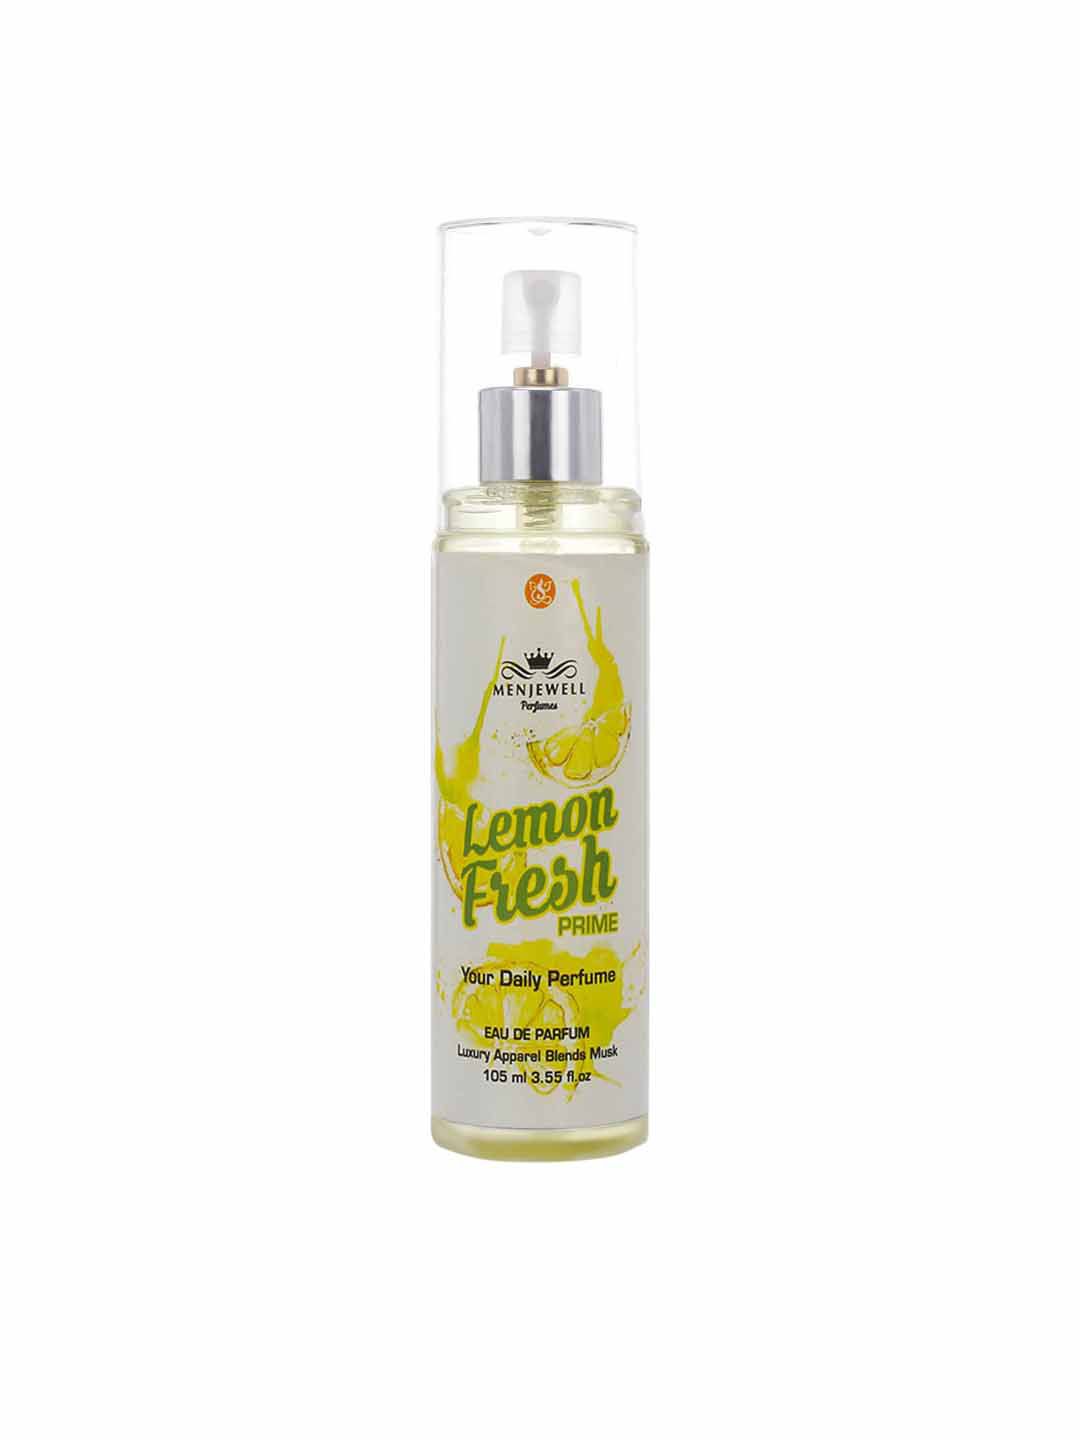 Menjewell Unisex Lemon Fresh Eau de Parfum 105 ml Price in India